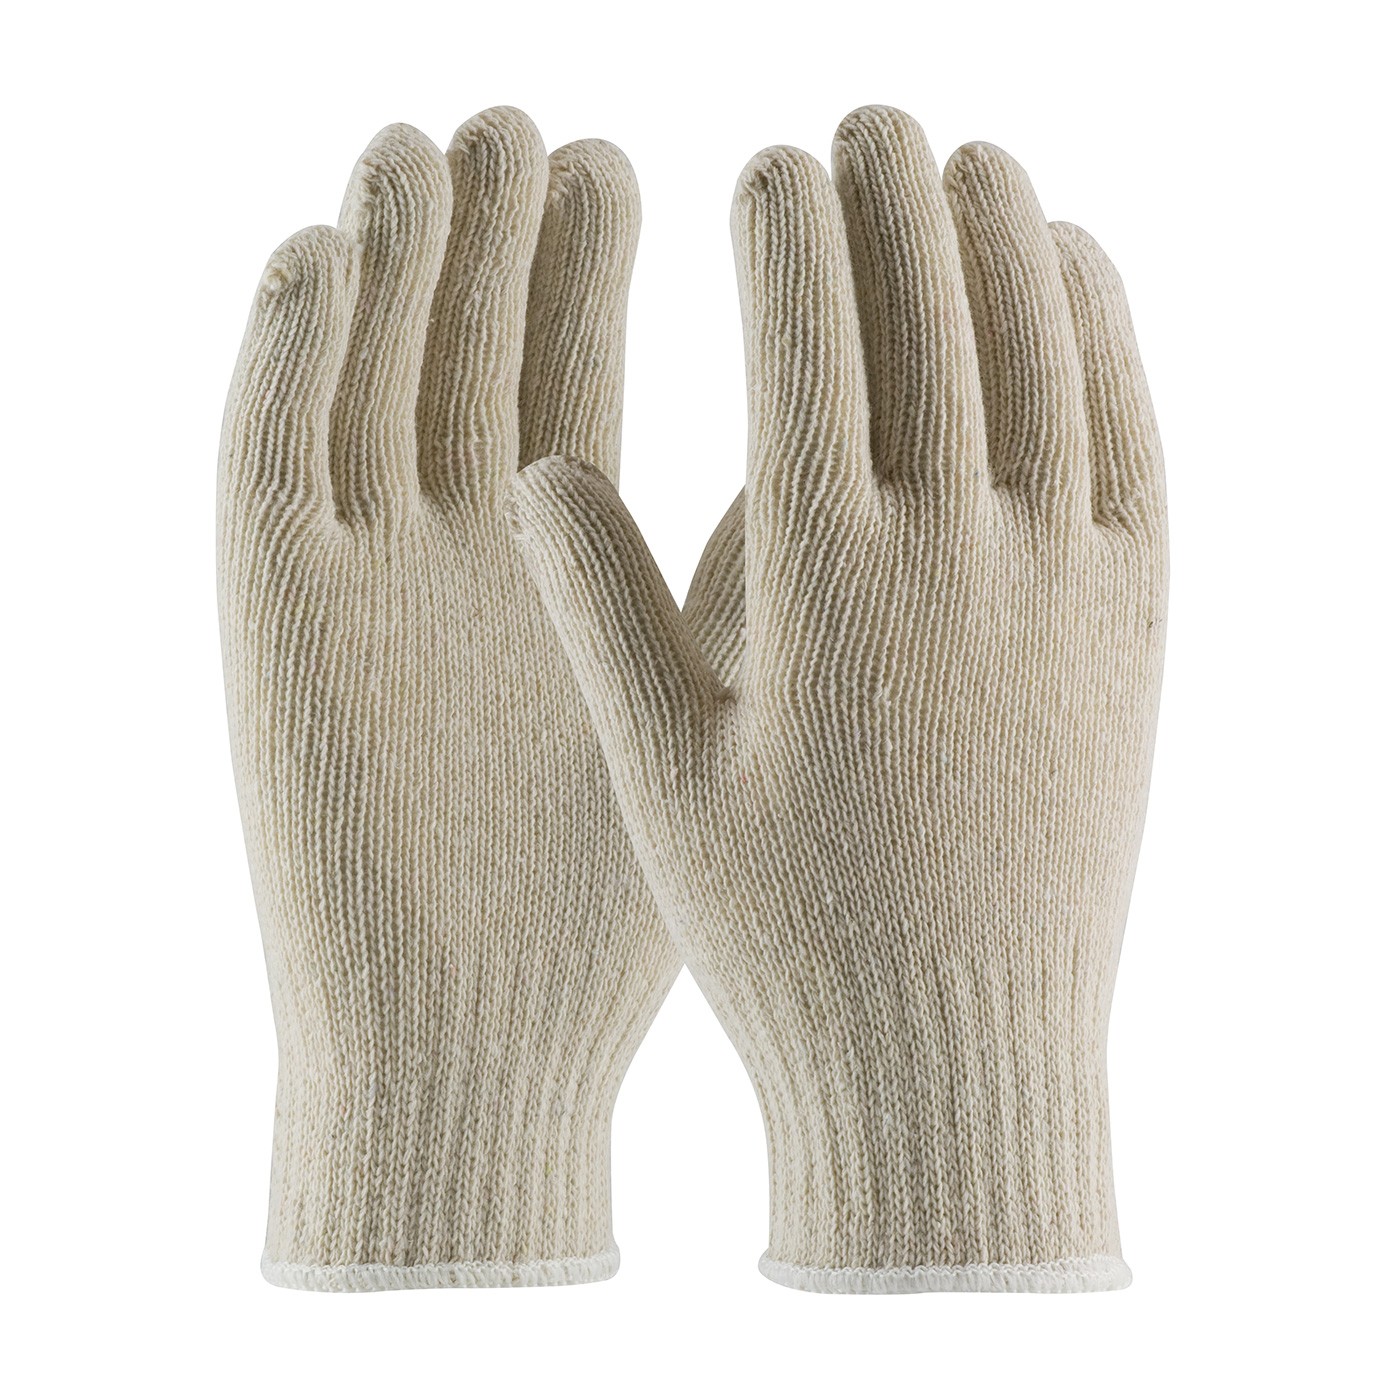 PIP® Medium Weight Seamless Knit Cotton / Polyester Glove - 7 Gauge  (#710S)